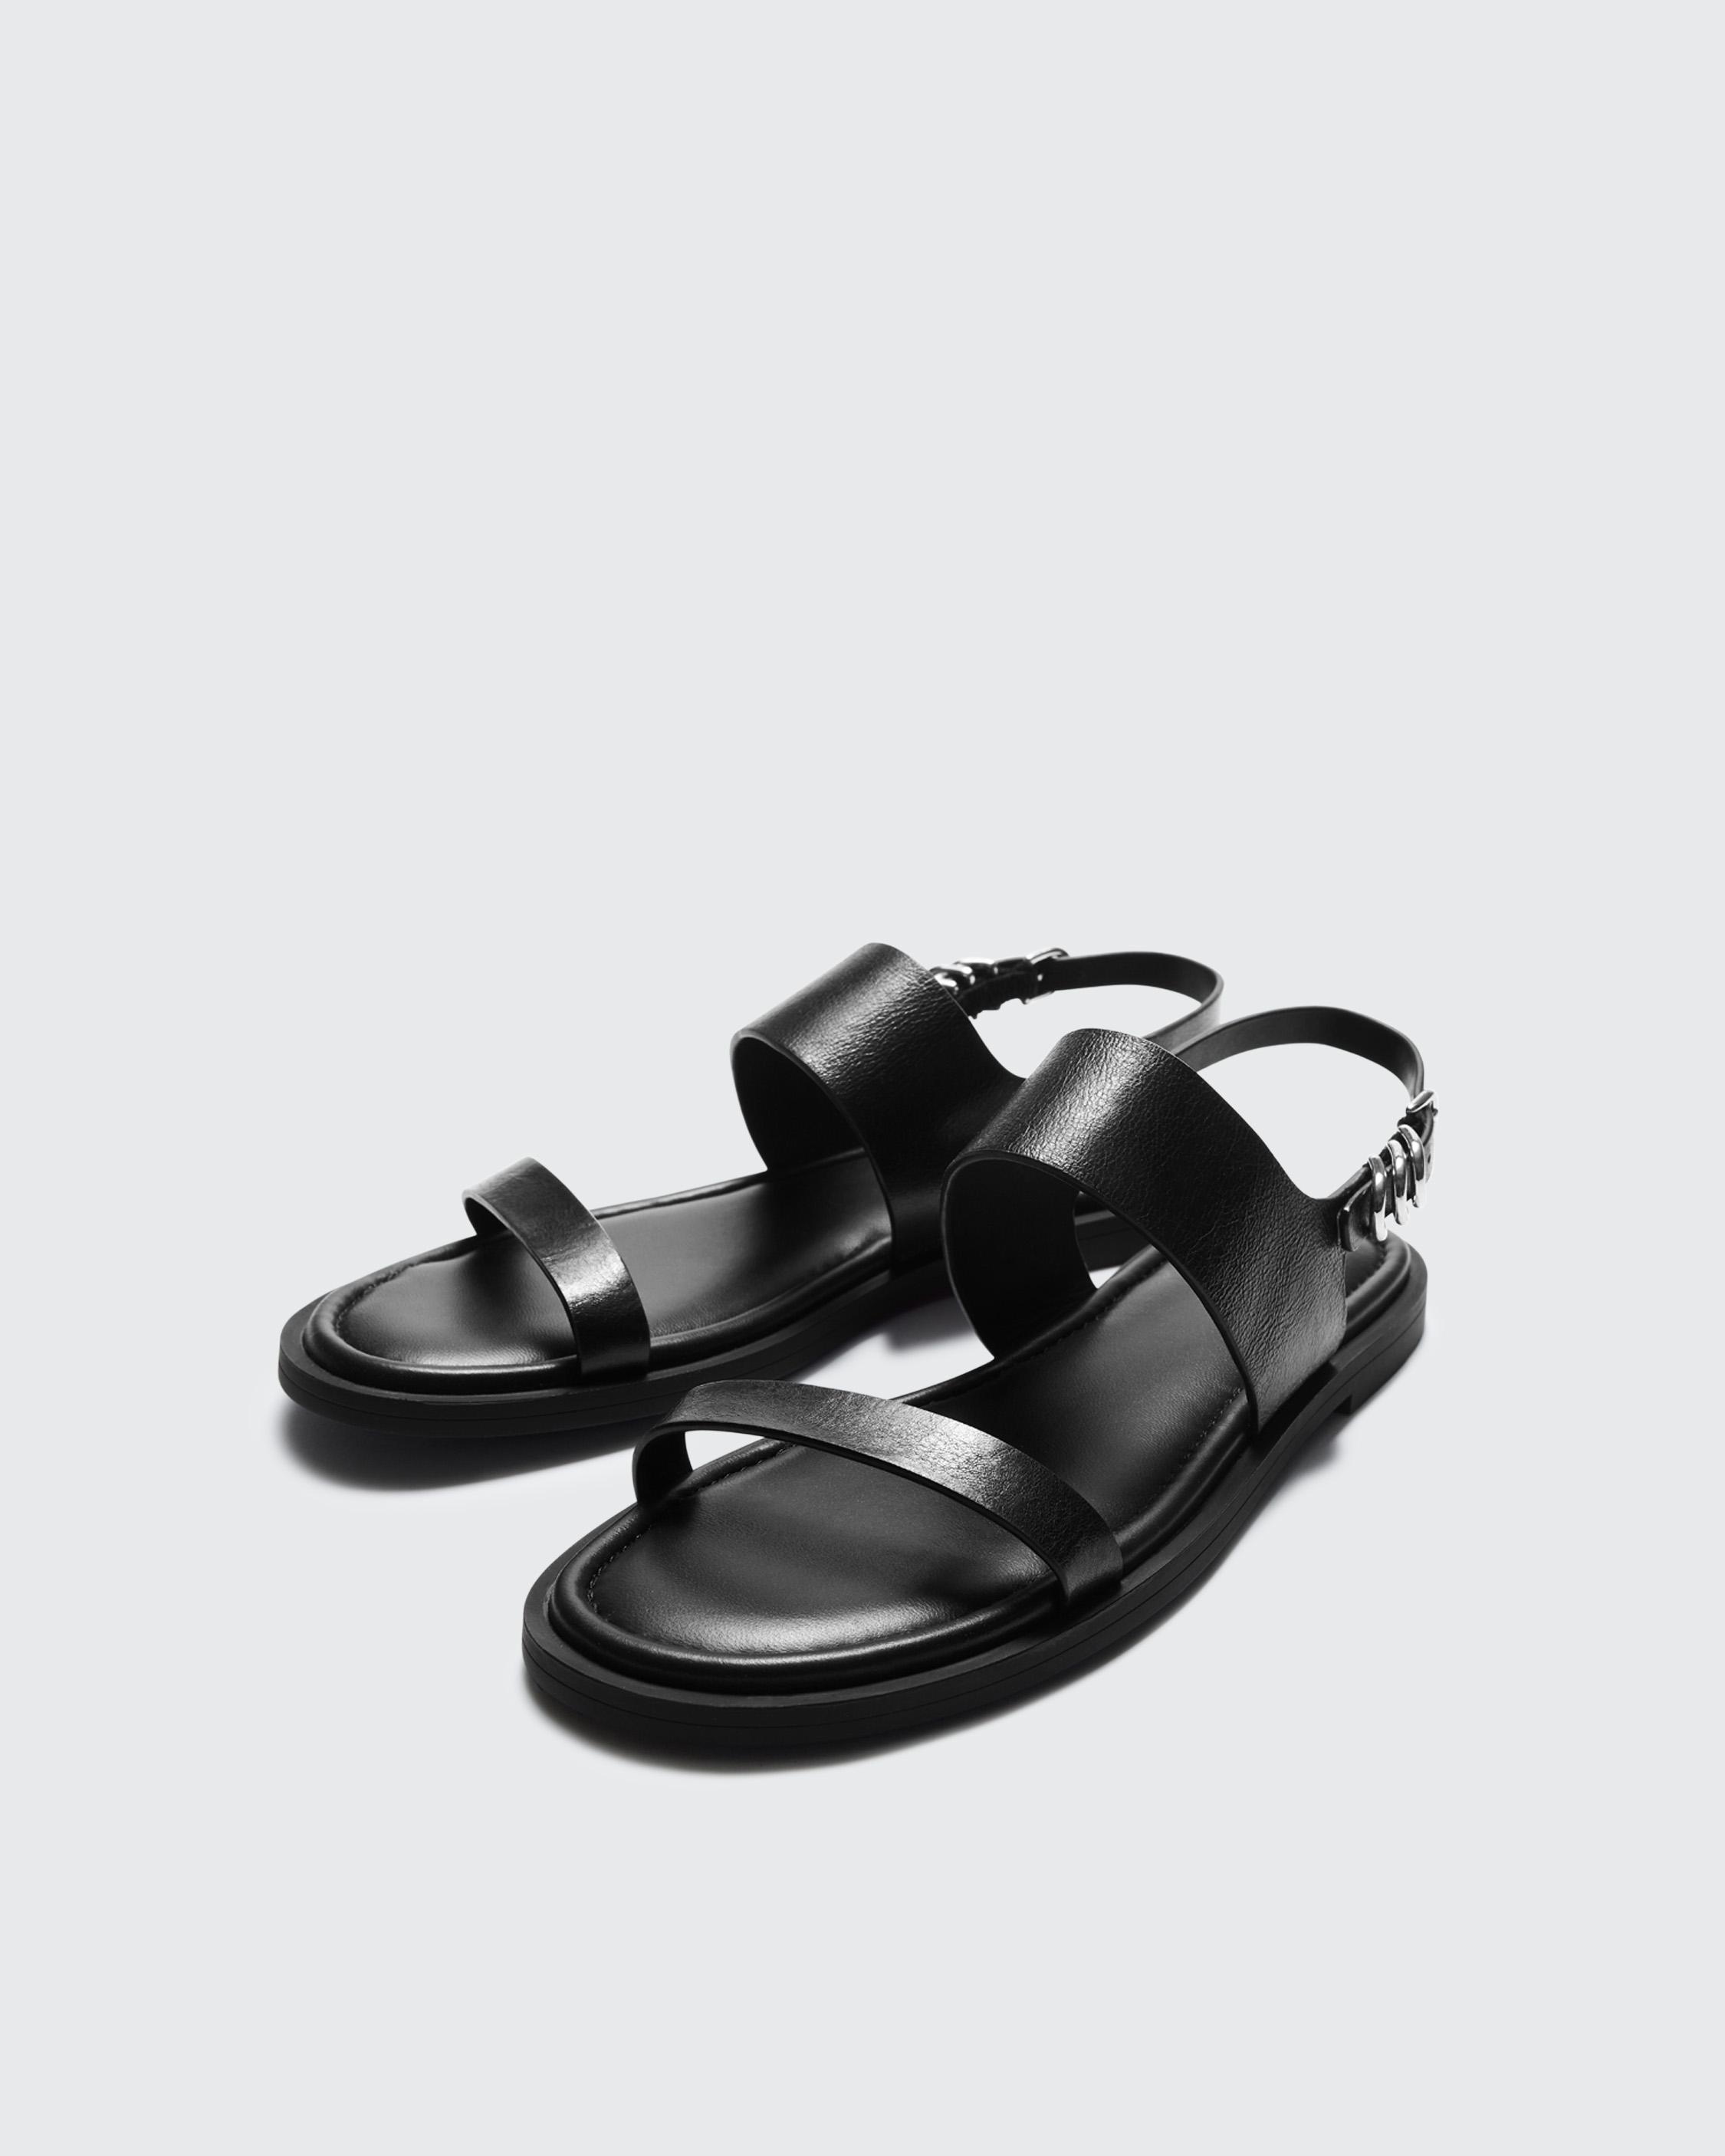 Geo Sandal - Leather
Flat Sandal - 3